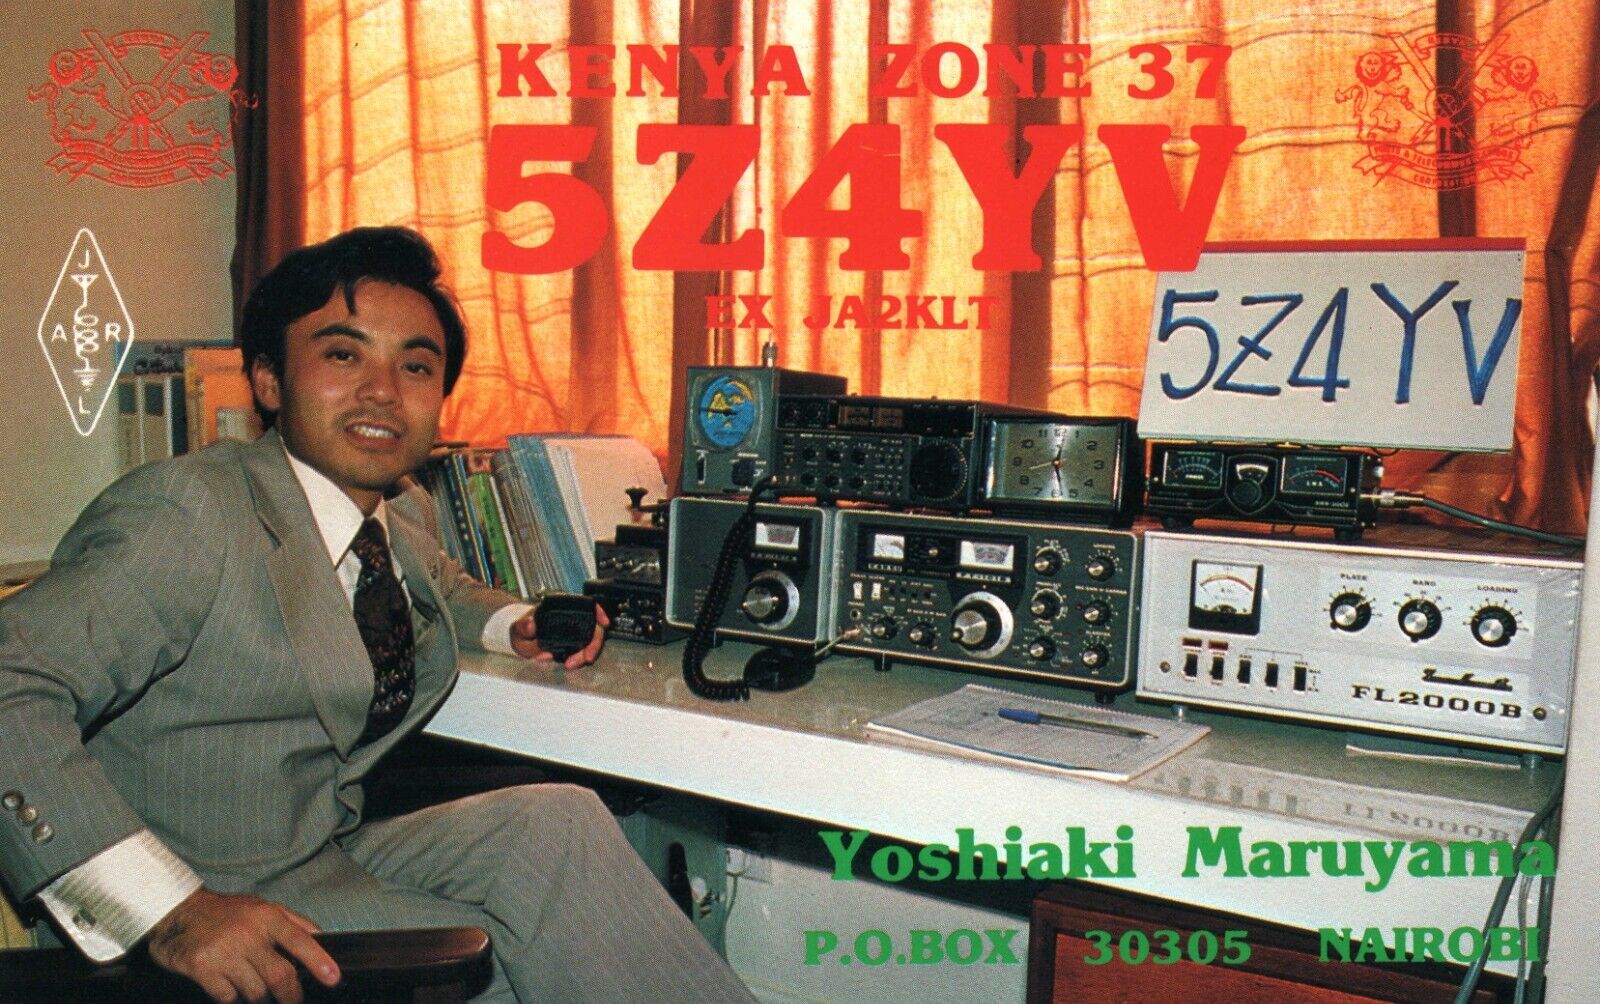 Yoshiaki Maruyama Amateur Ham Radio Equipment Vintage QSL Card Postcard Size